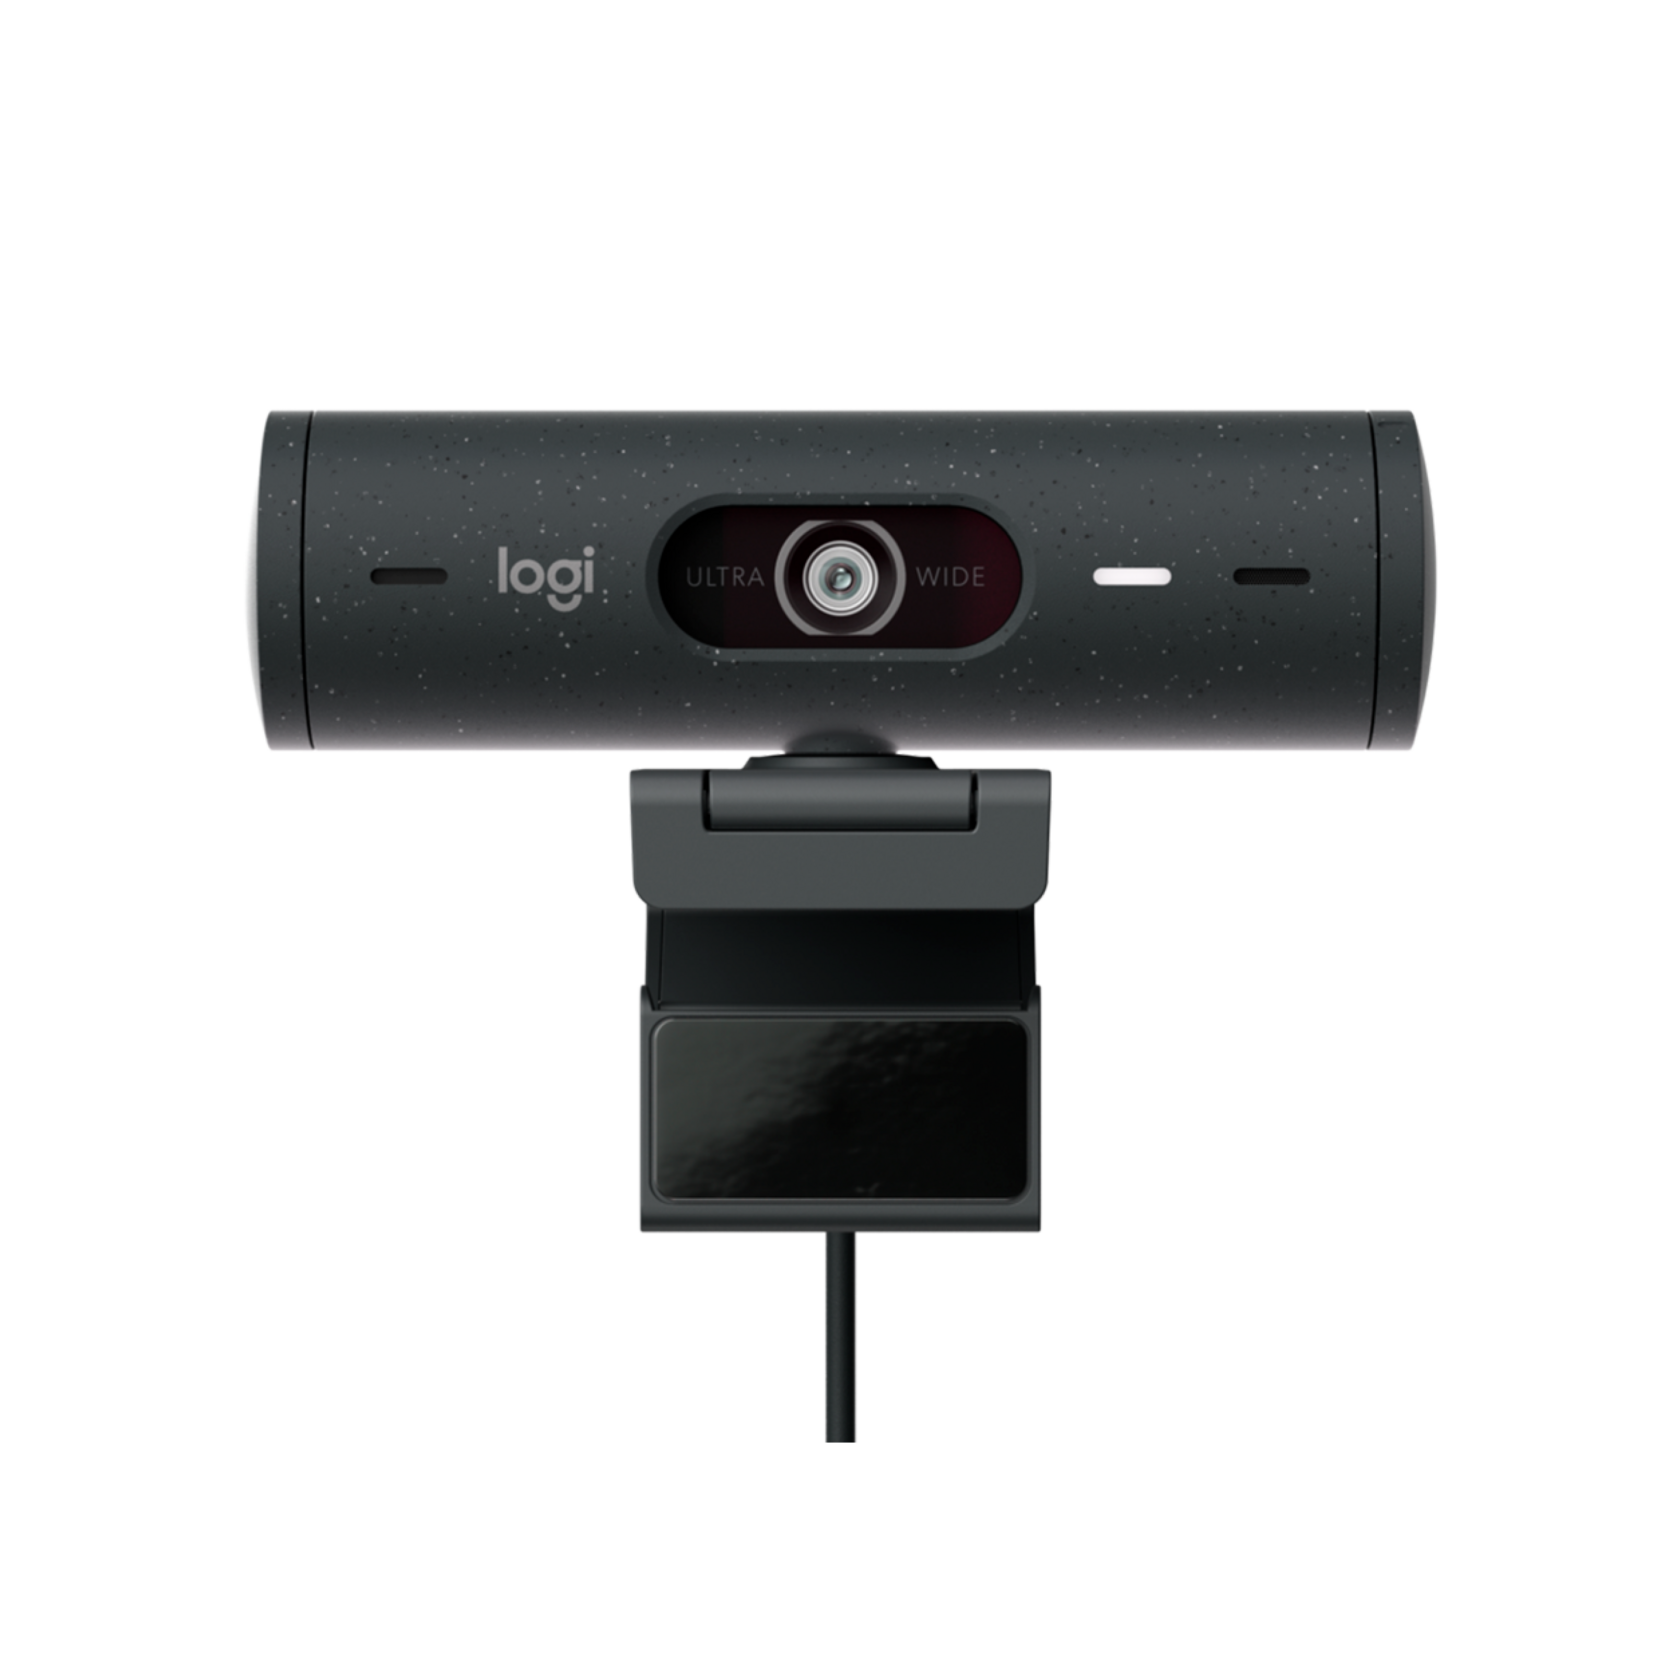 Логитеч брио. Веб-камера Logitech Brio. Брио 500 логитеч. Веб-камера Logitech Brio 300 (960-001436).